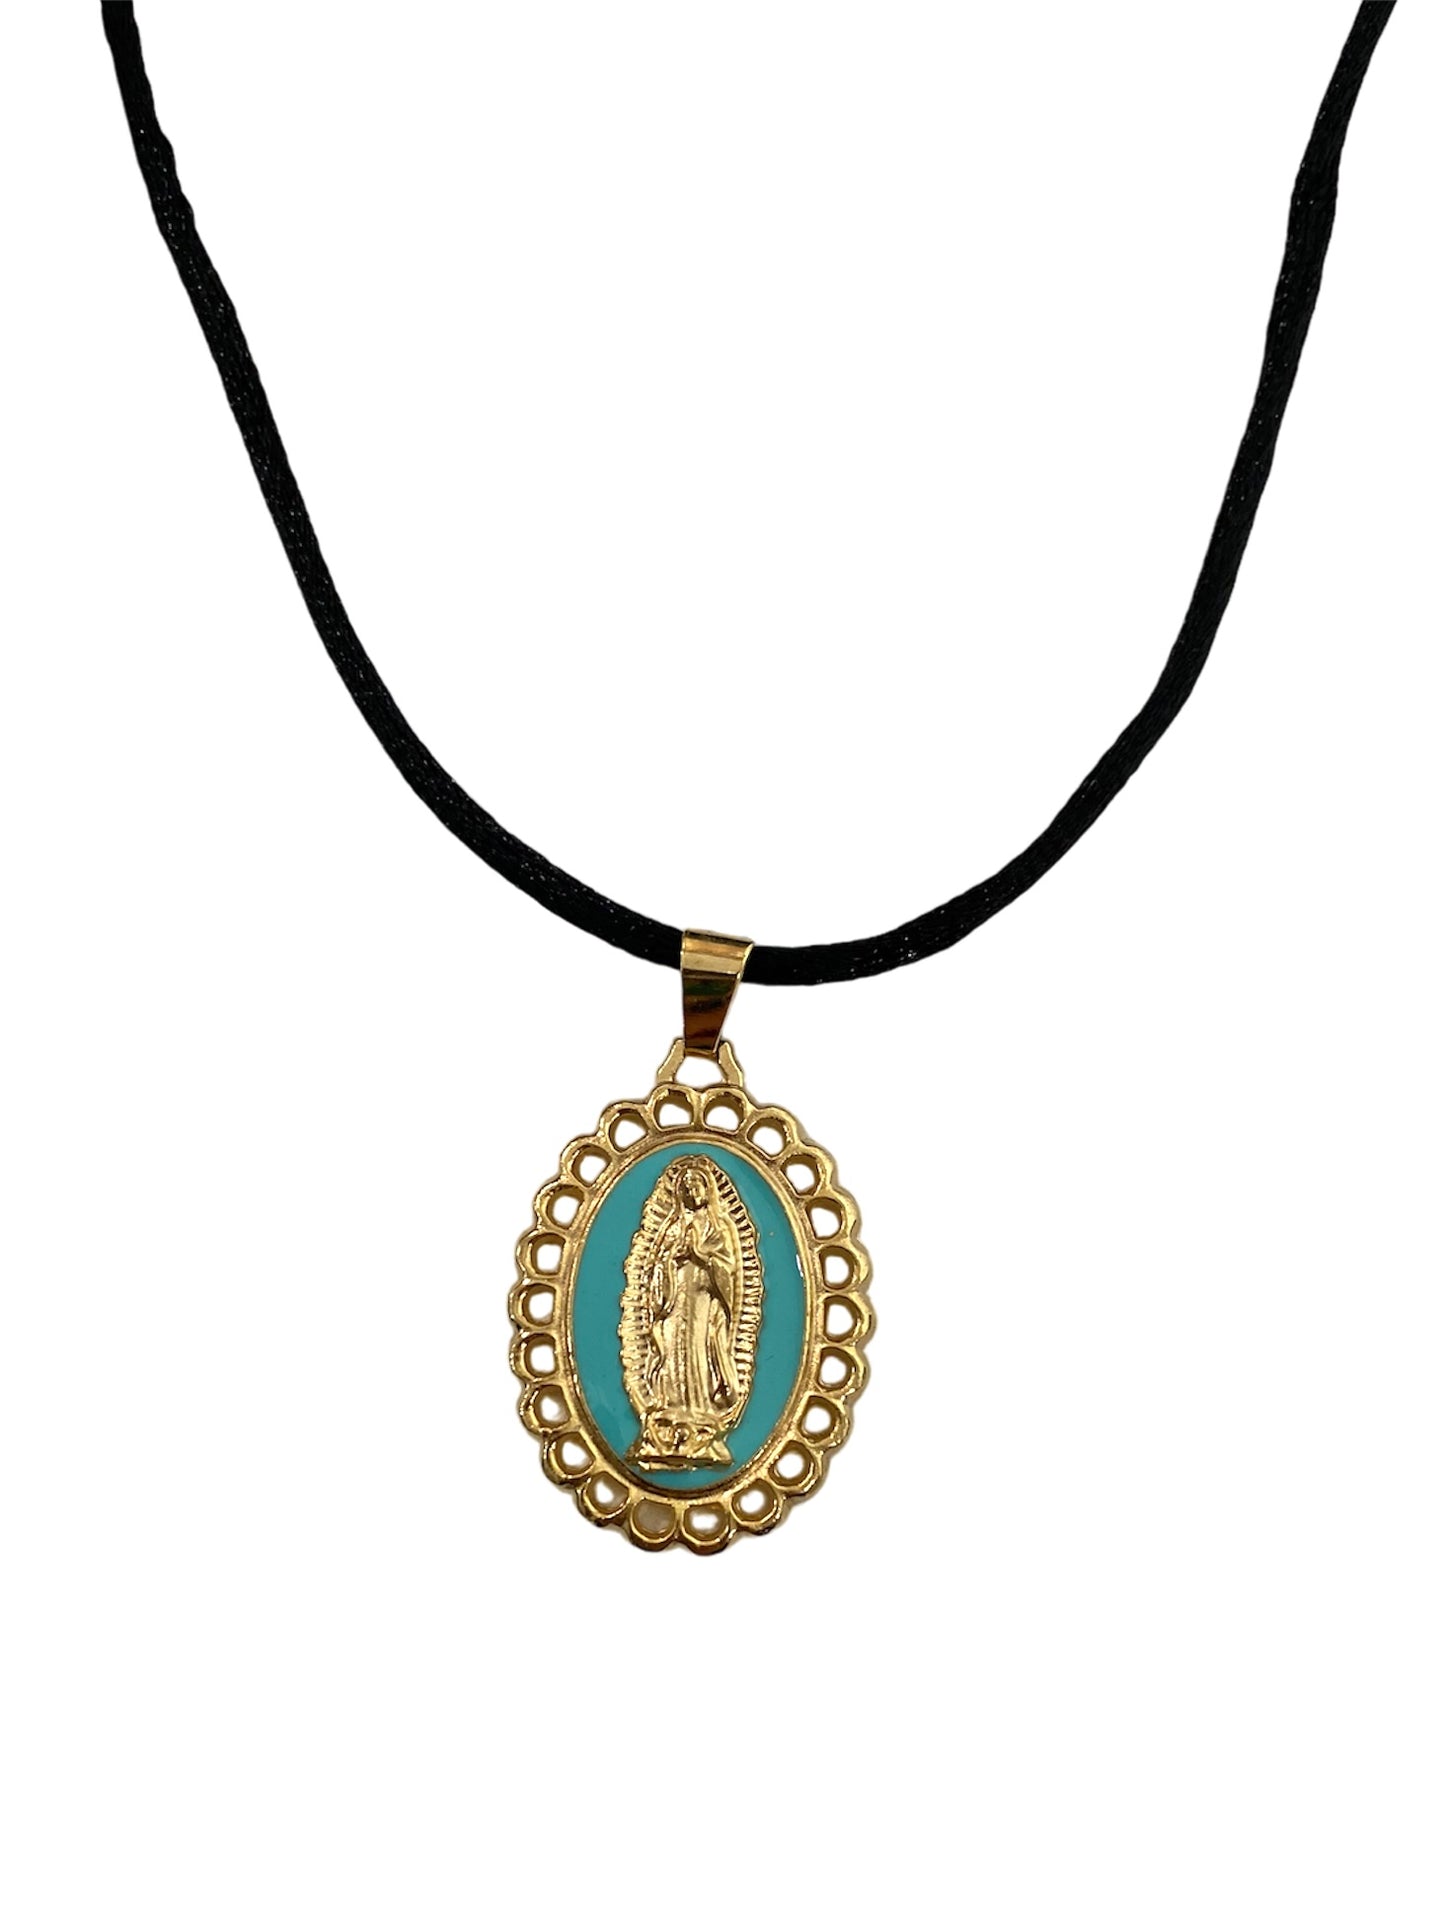 Medalla Virgen de Guadalupe con hilo